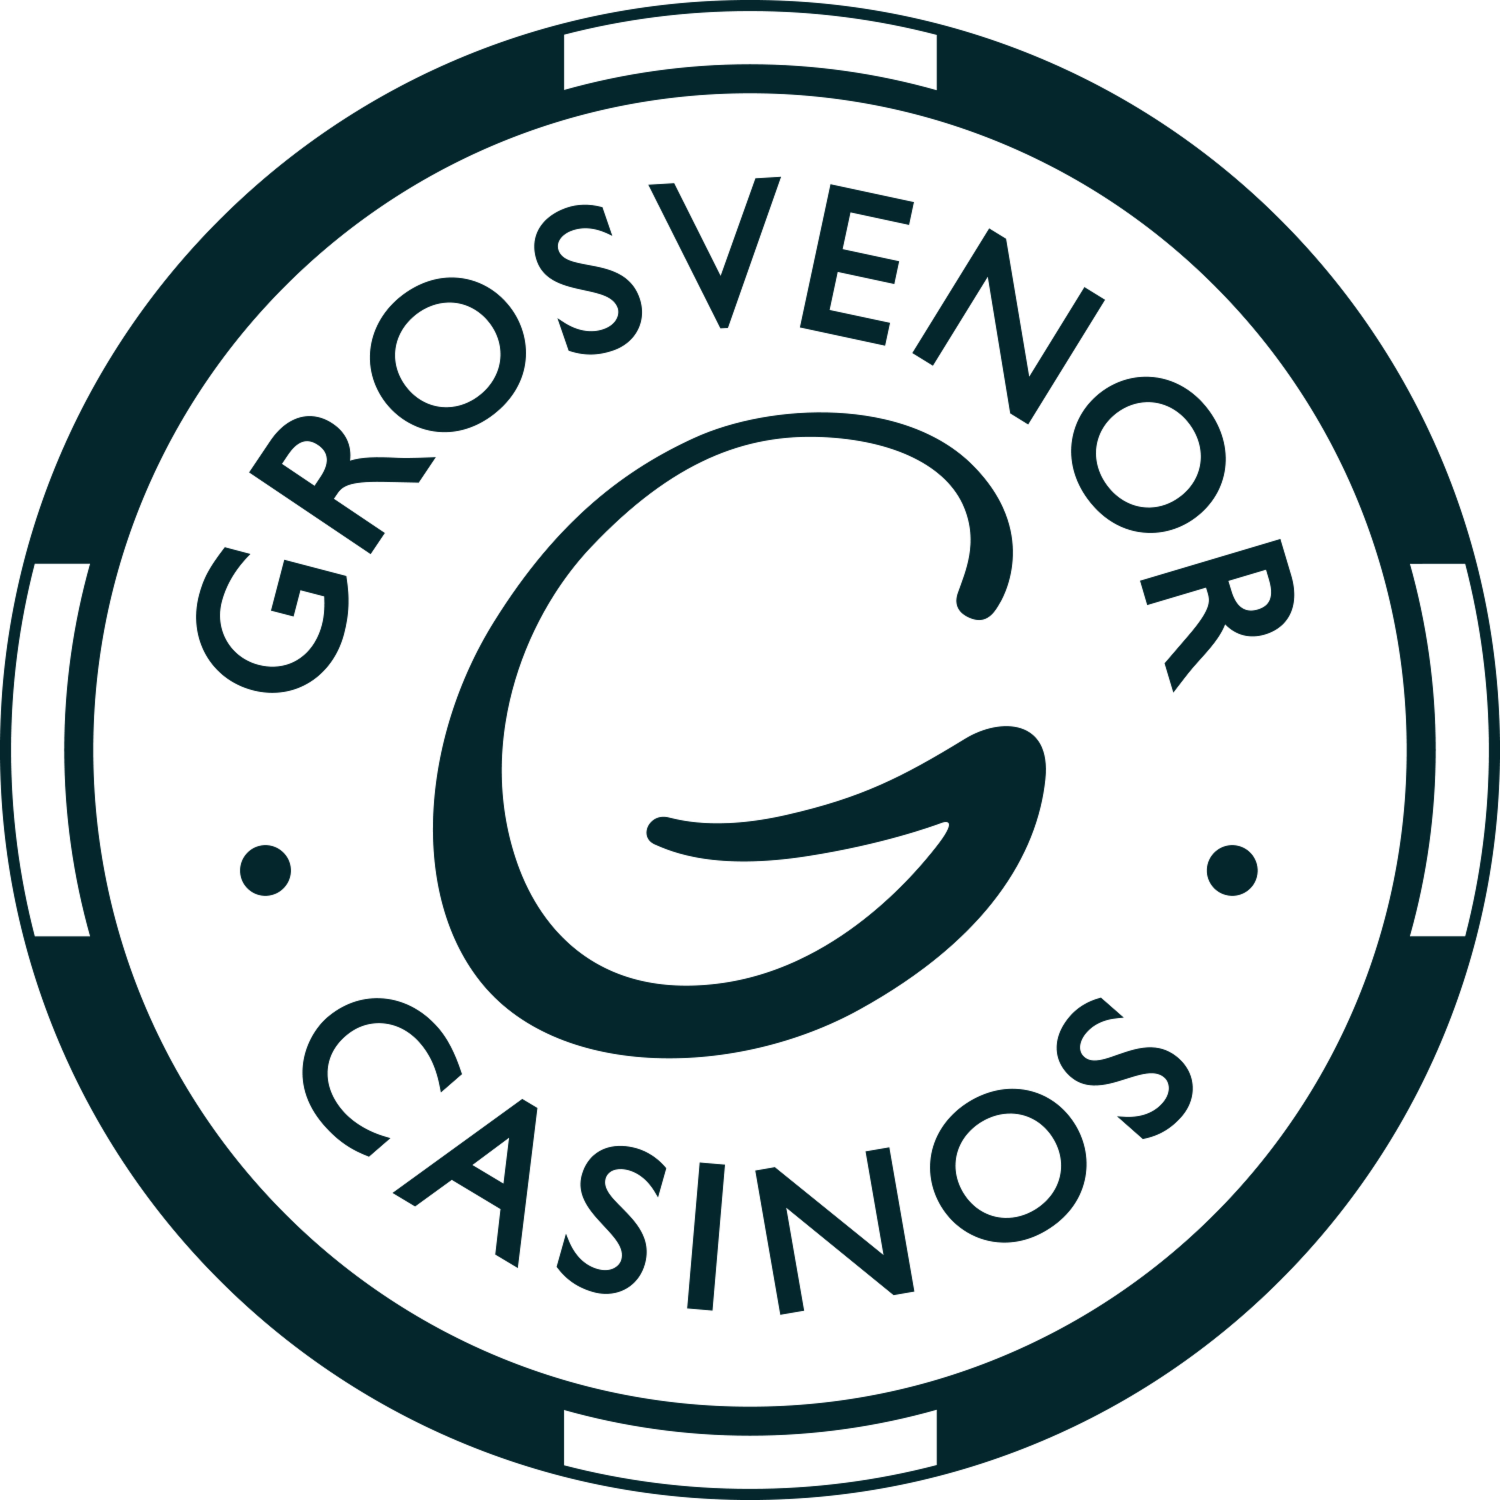 Grosvenor Logo - Grosvenor Casinos - ICE London 2020 - Welcome to ICE London